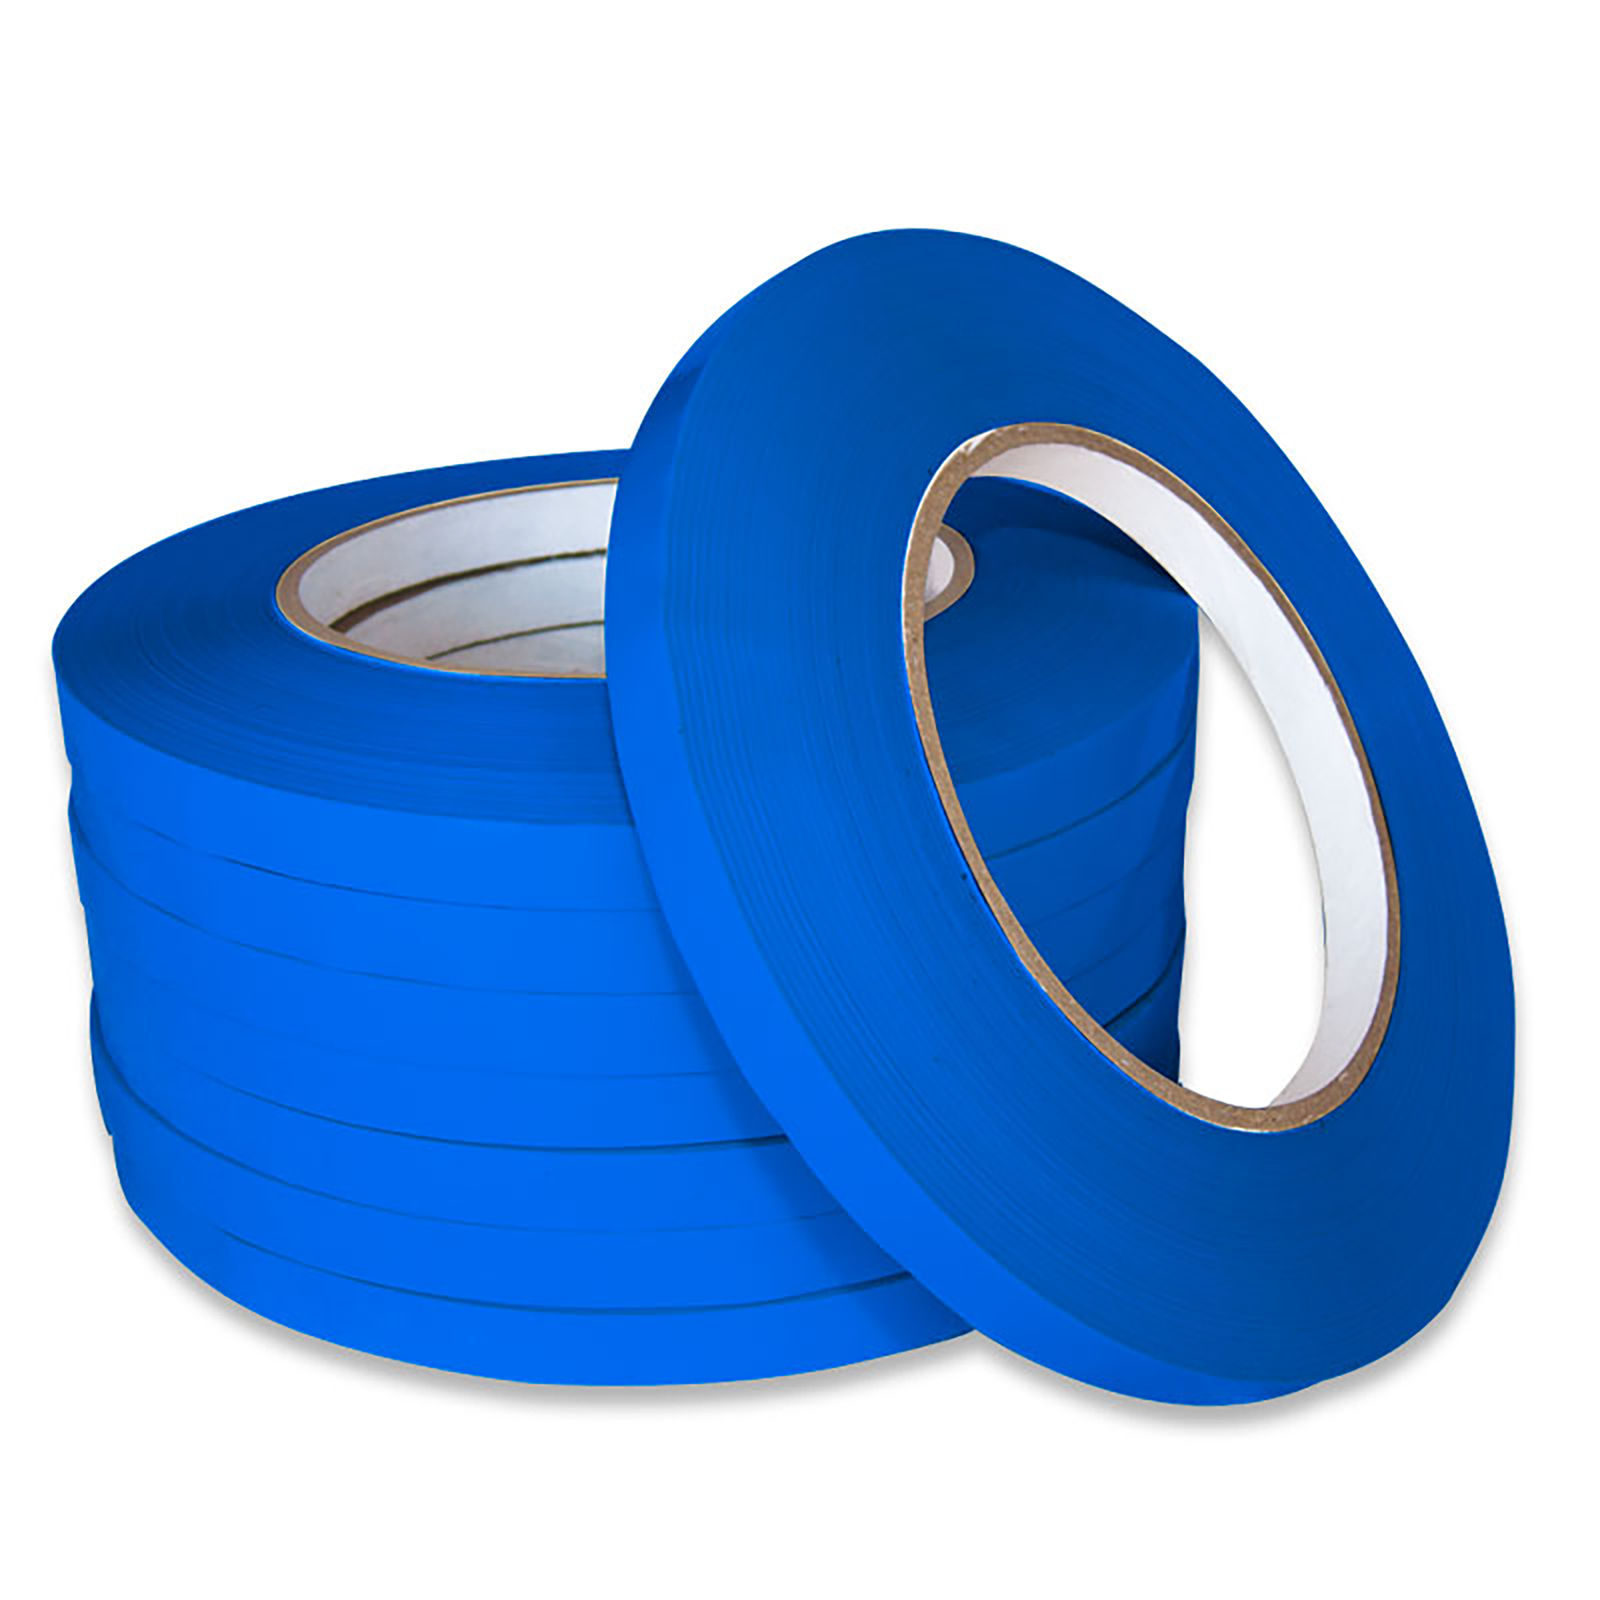 Pack of of 10 rolls of blue bag closer tape